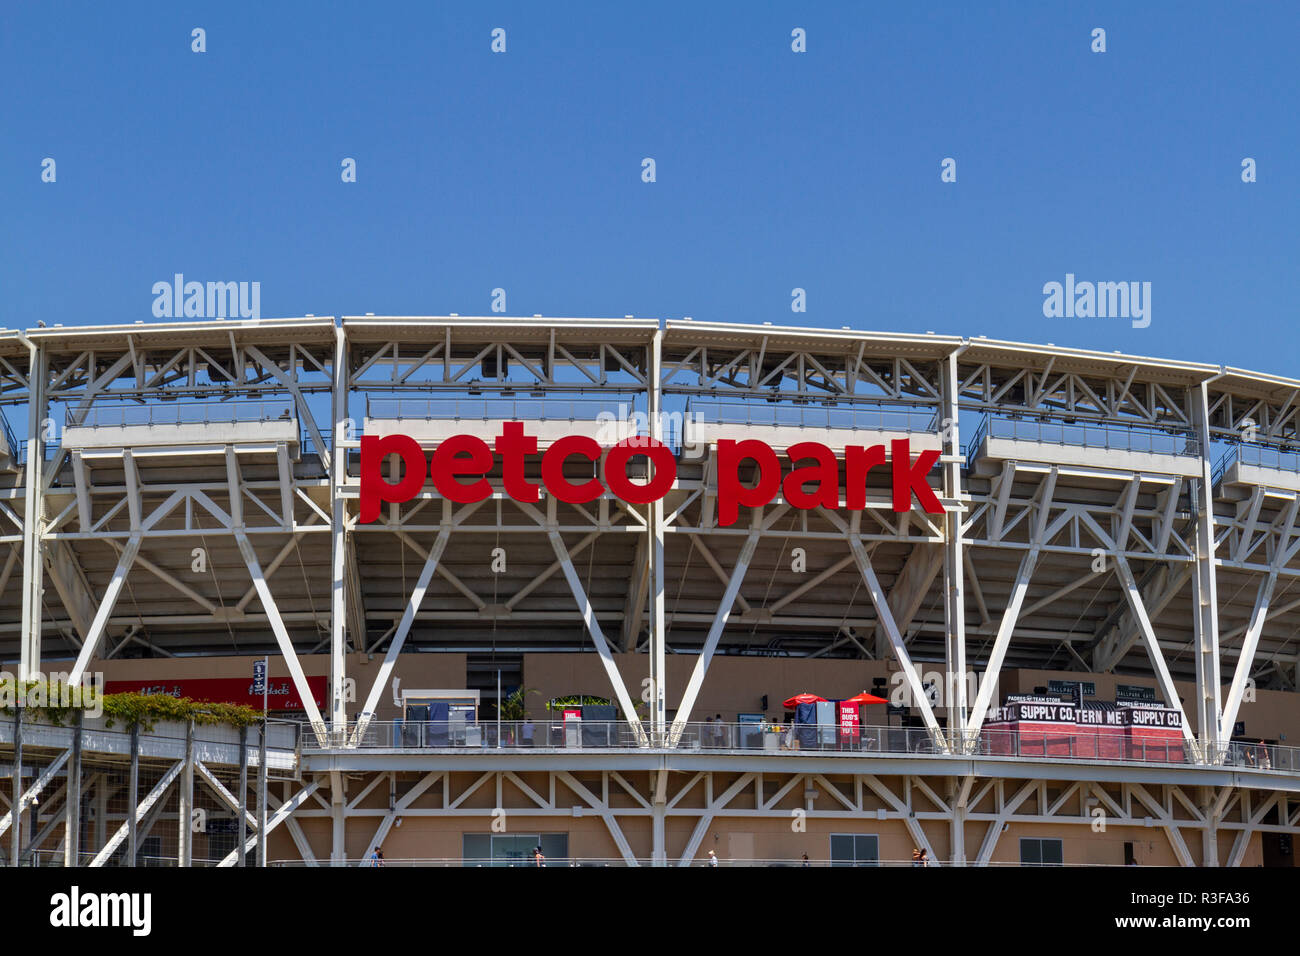 Petco Park, Heimstadion der San Diego Padres Baseball Team, am Spieltag, San Diego, CA, USA. Stockfoto